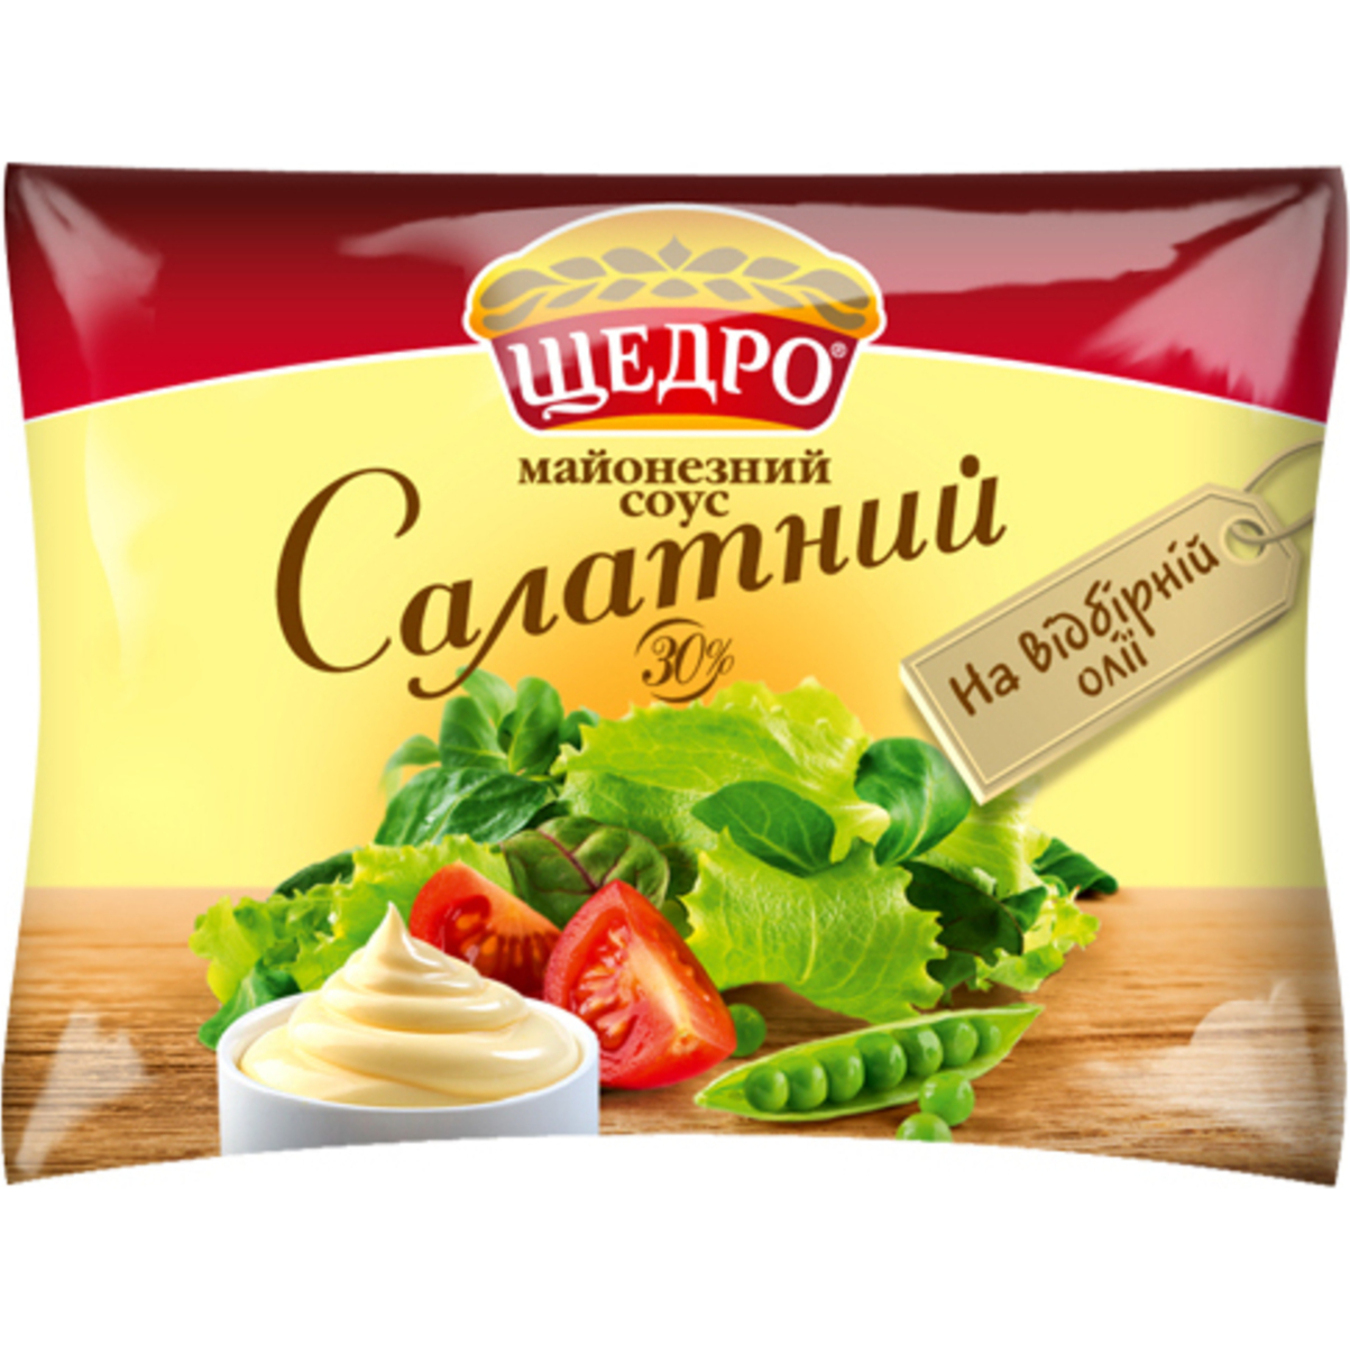 Schedro Salad Mayonnaise Sauce 30% 190g